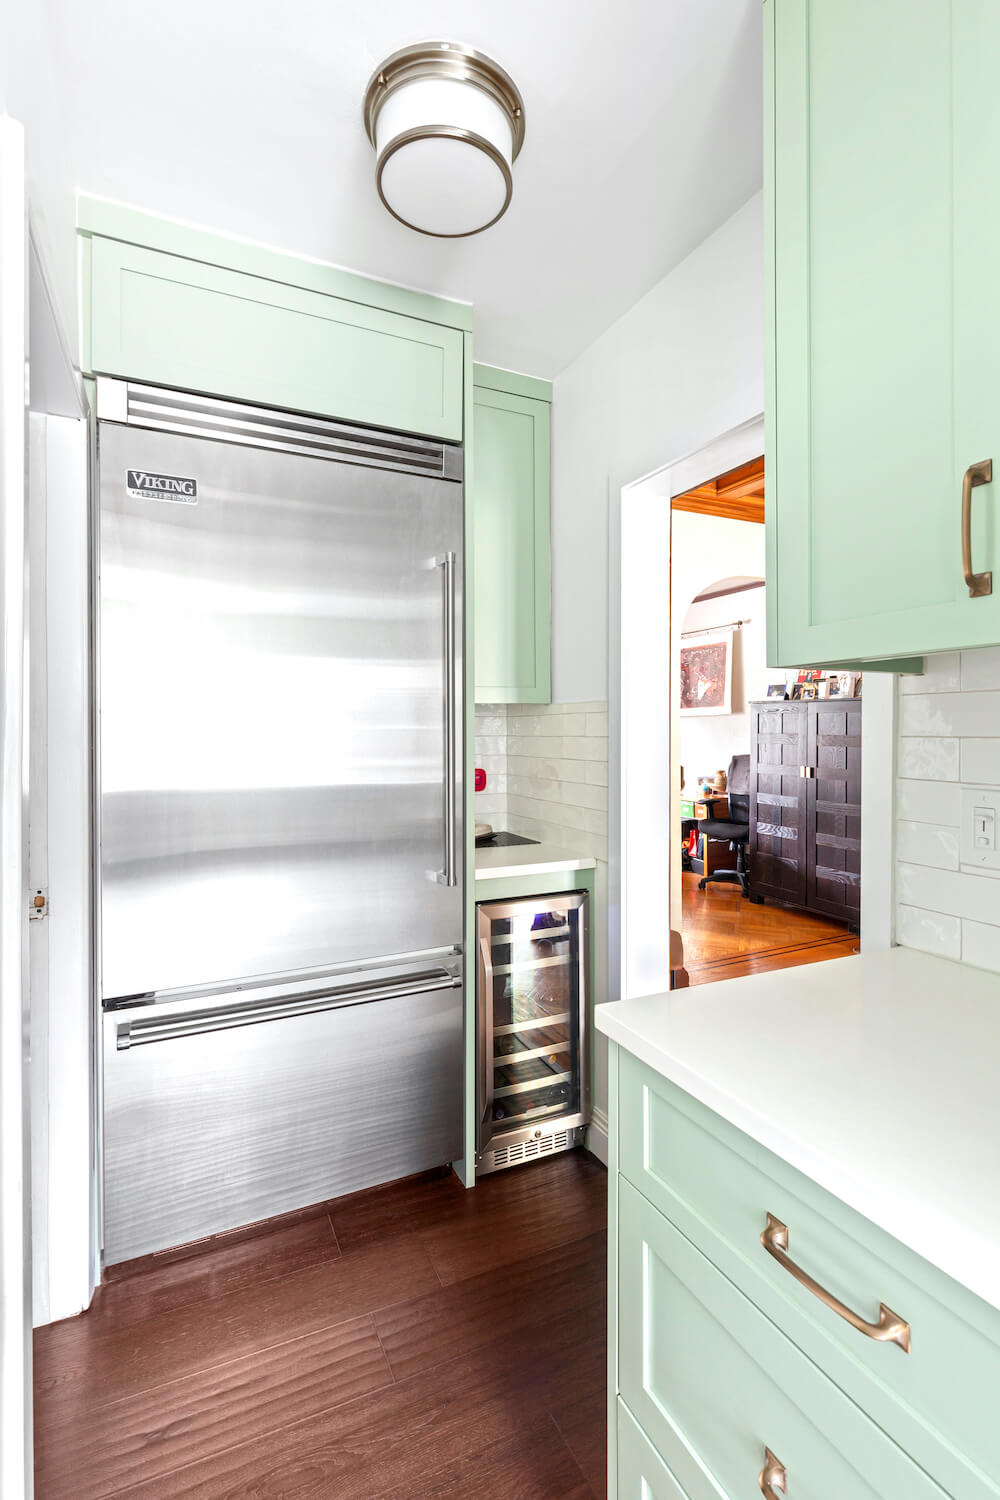 refrigerator and wine fridge